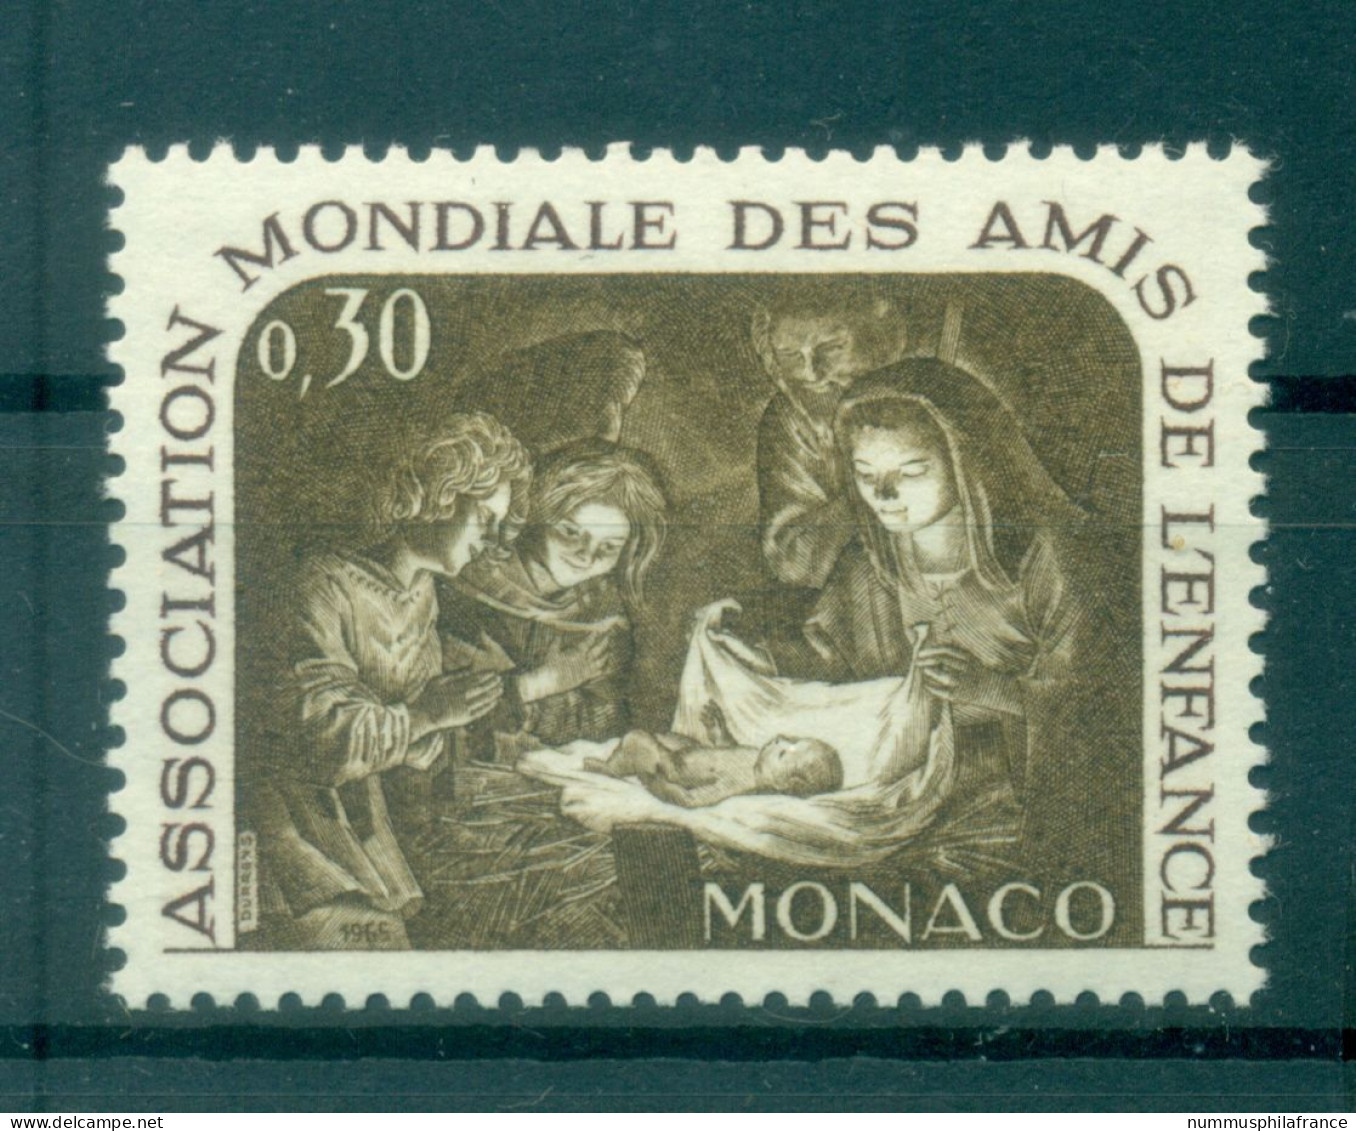 Monaco 1966 - Y & T  N. 688 - AMADE - Ungebraucht